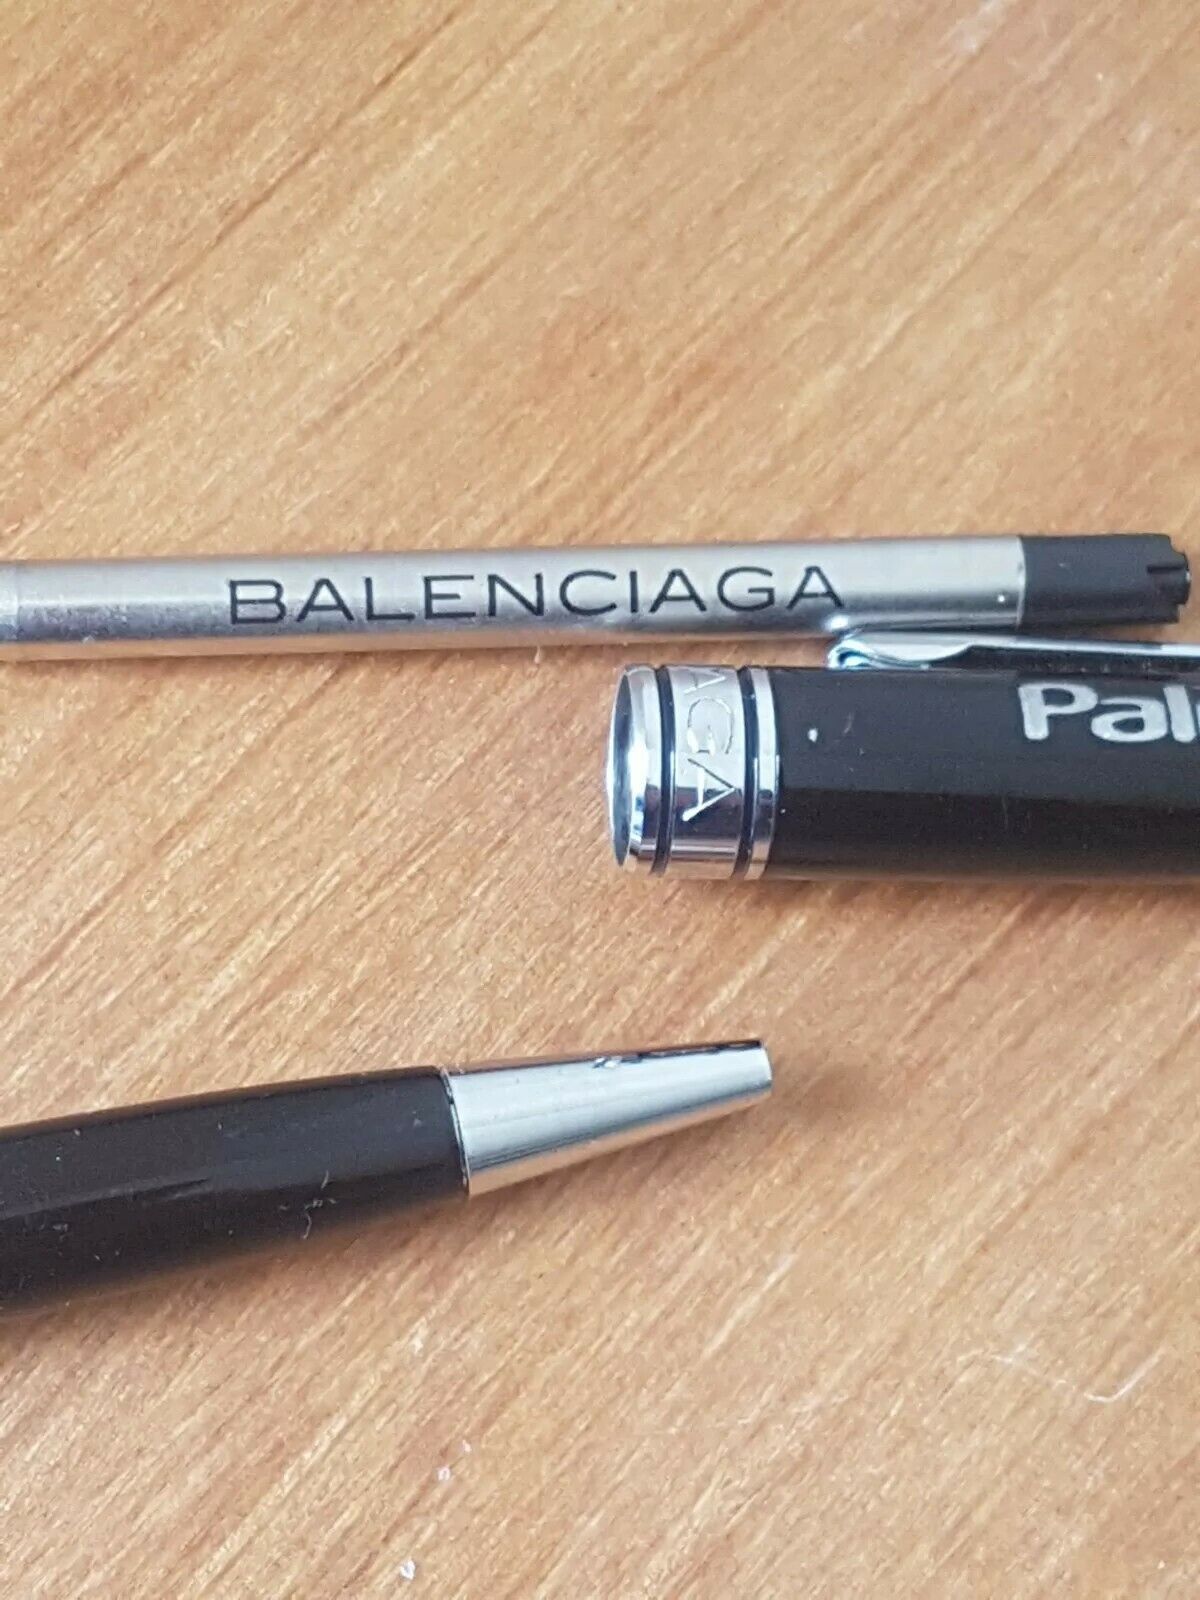 Balenciaga Ballpoint France pointe à bille | eBay